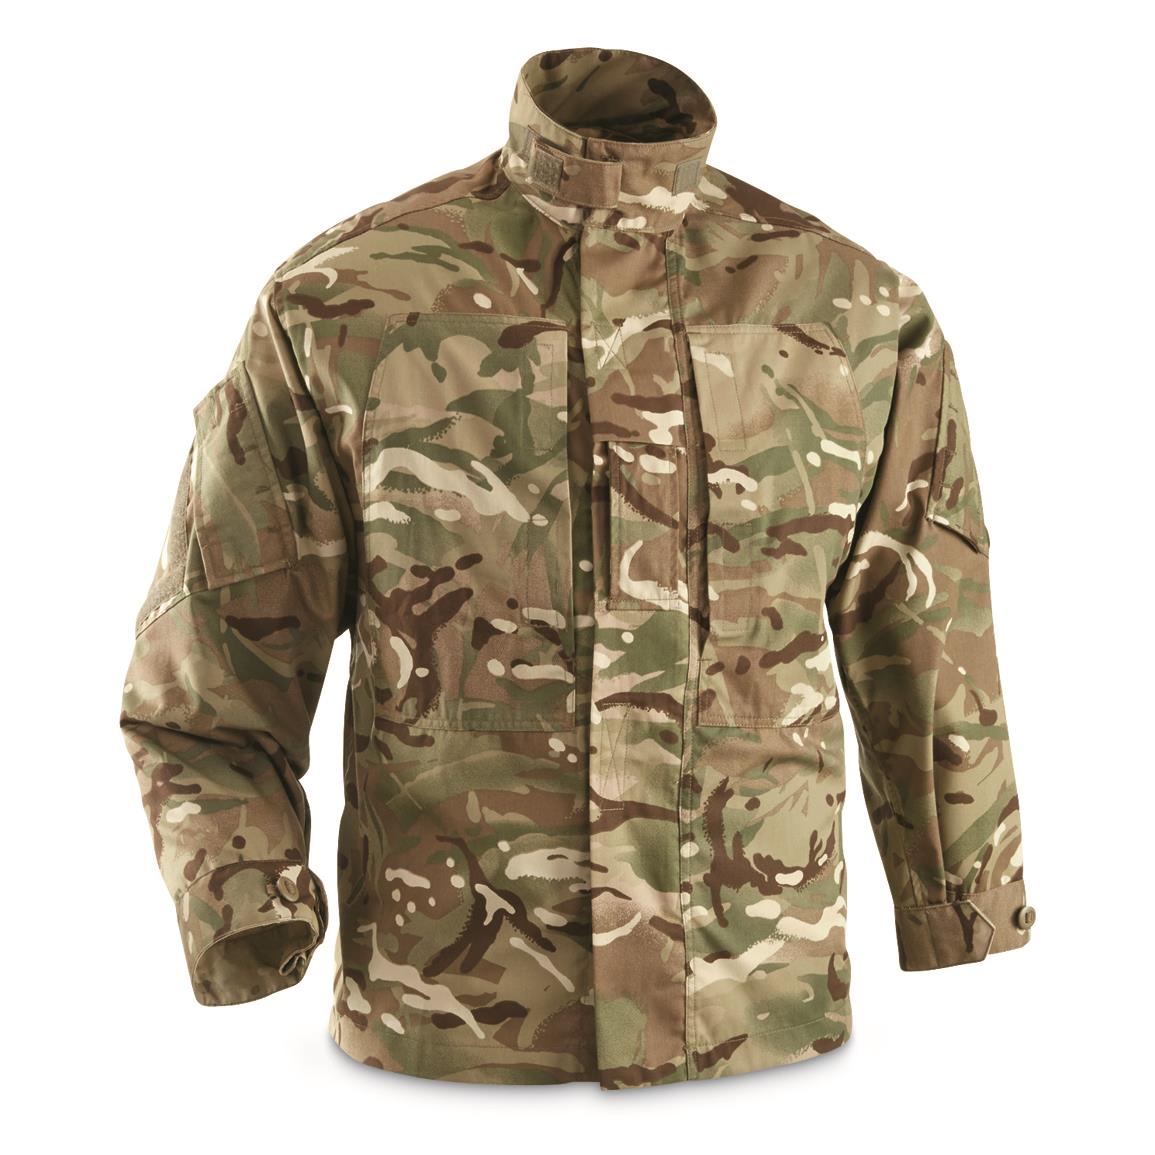 British Military Surplus PCS Field Jacket, Like New